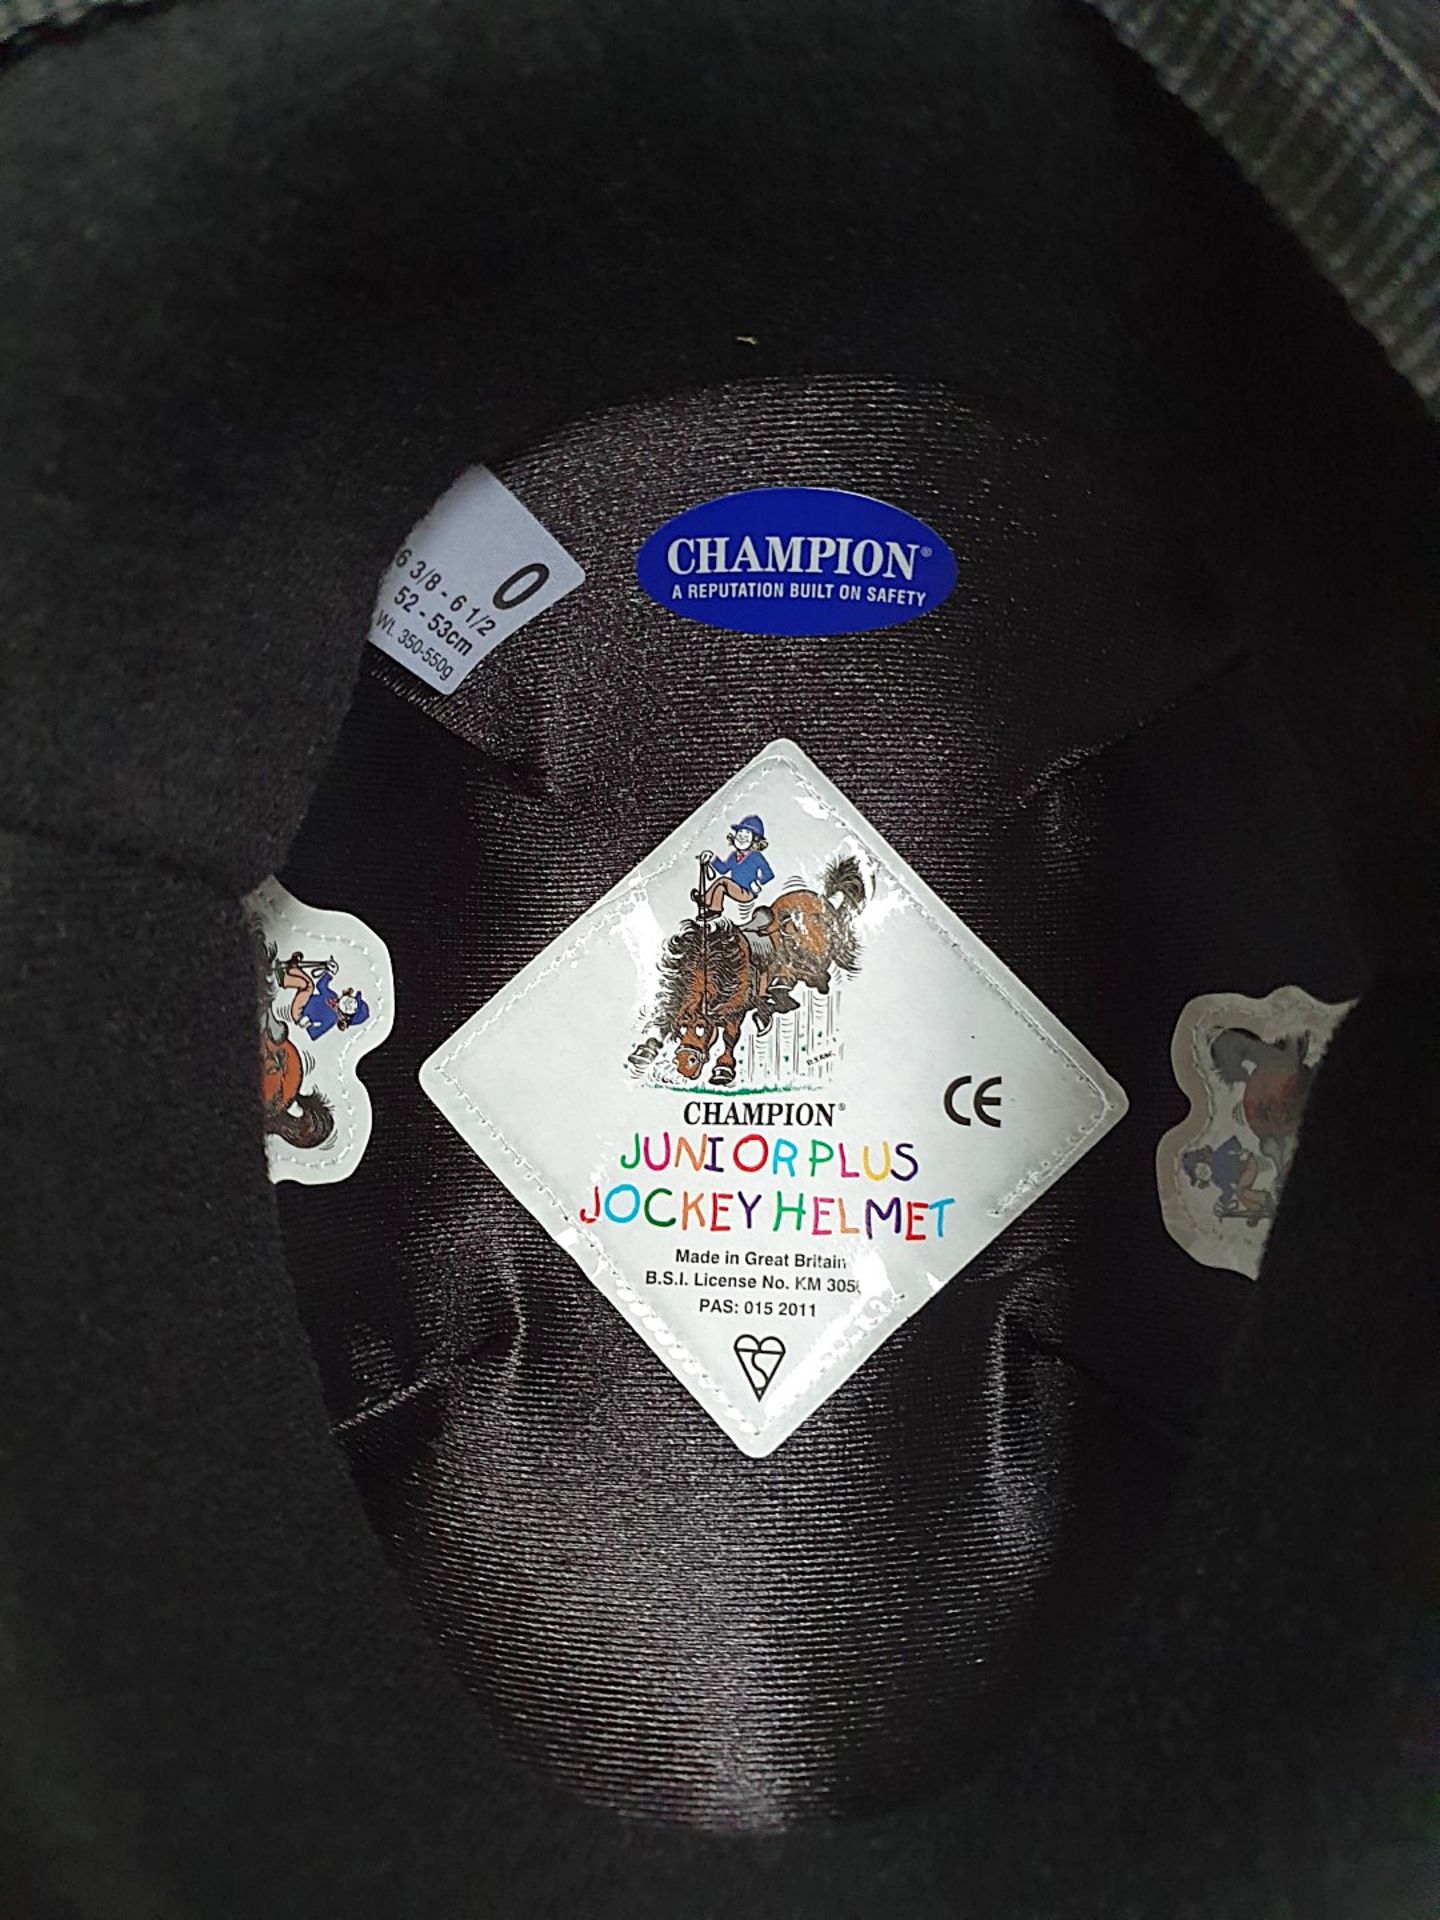 1 x Champion Junior Plus Equestrian Helmet in Black - Size 52-53cm - Ref723 - CL401 - Brand New Stoc - Image 7 of 7